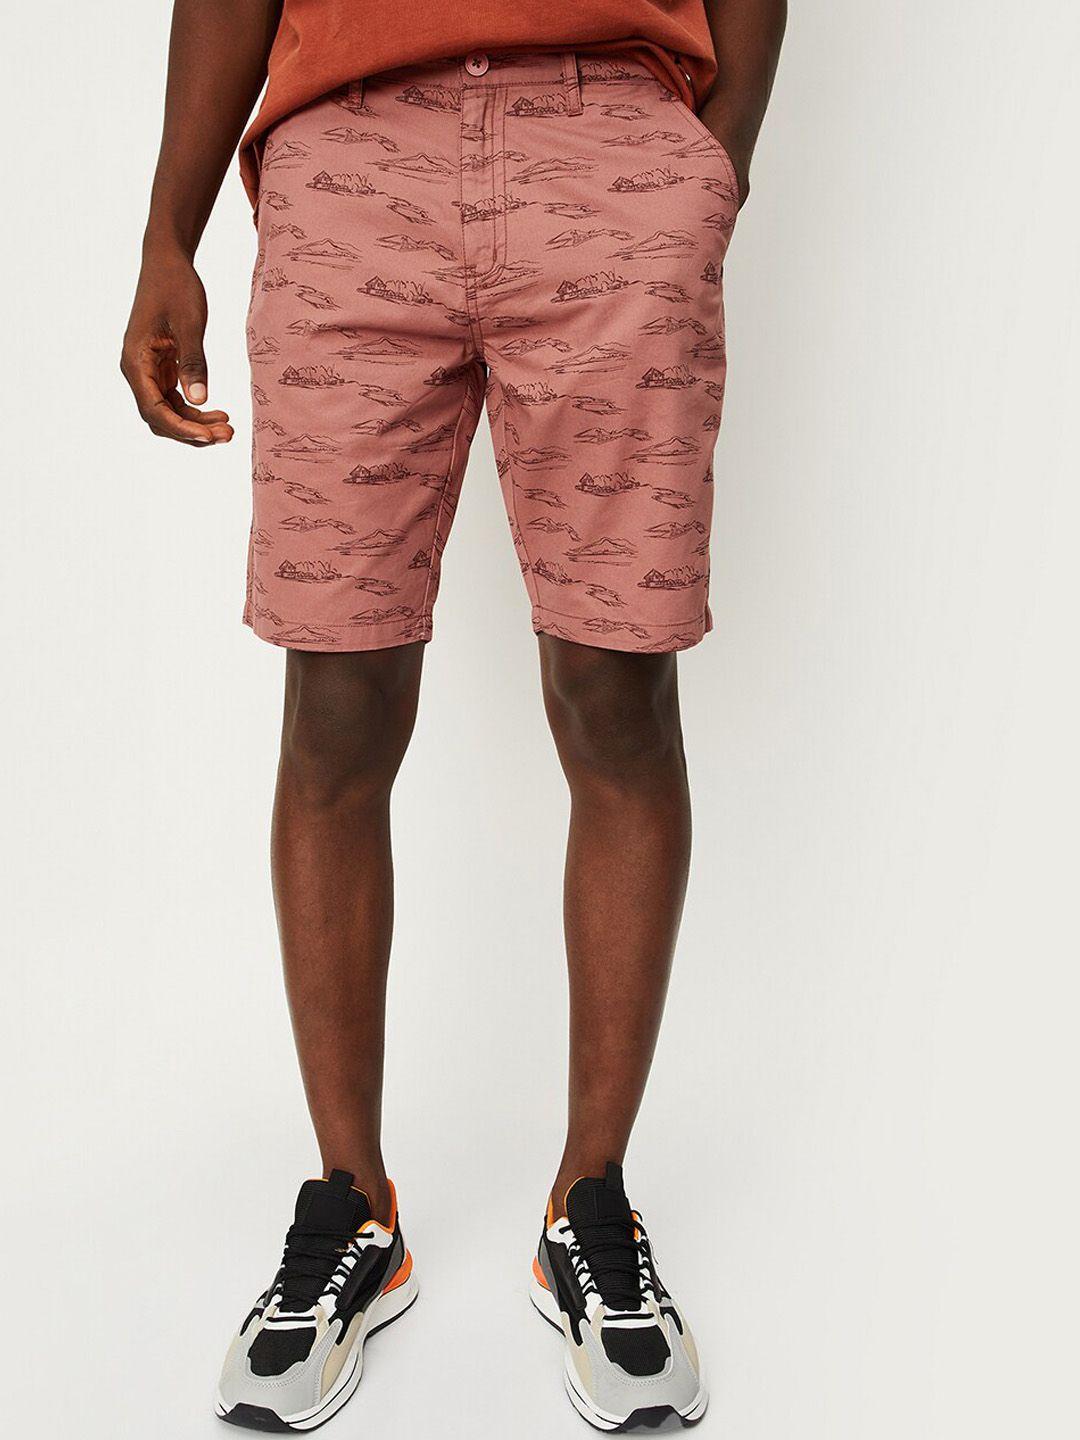 max-men-conversational-printed-pure-cotton-shorts